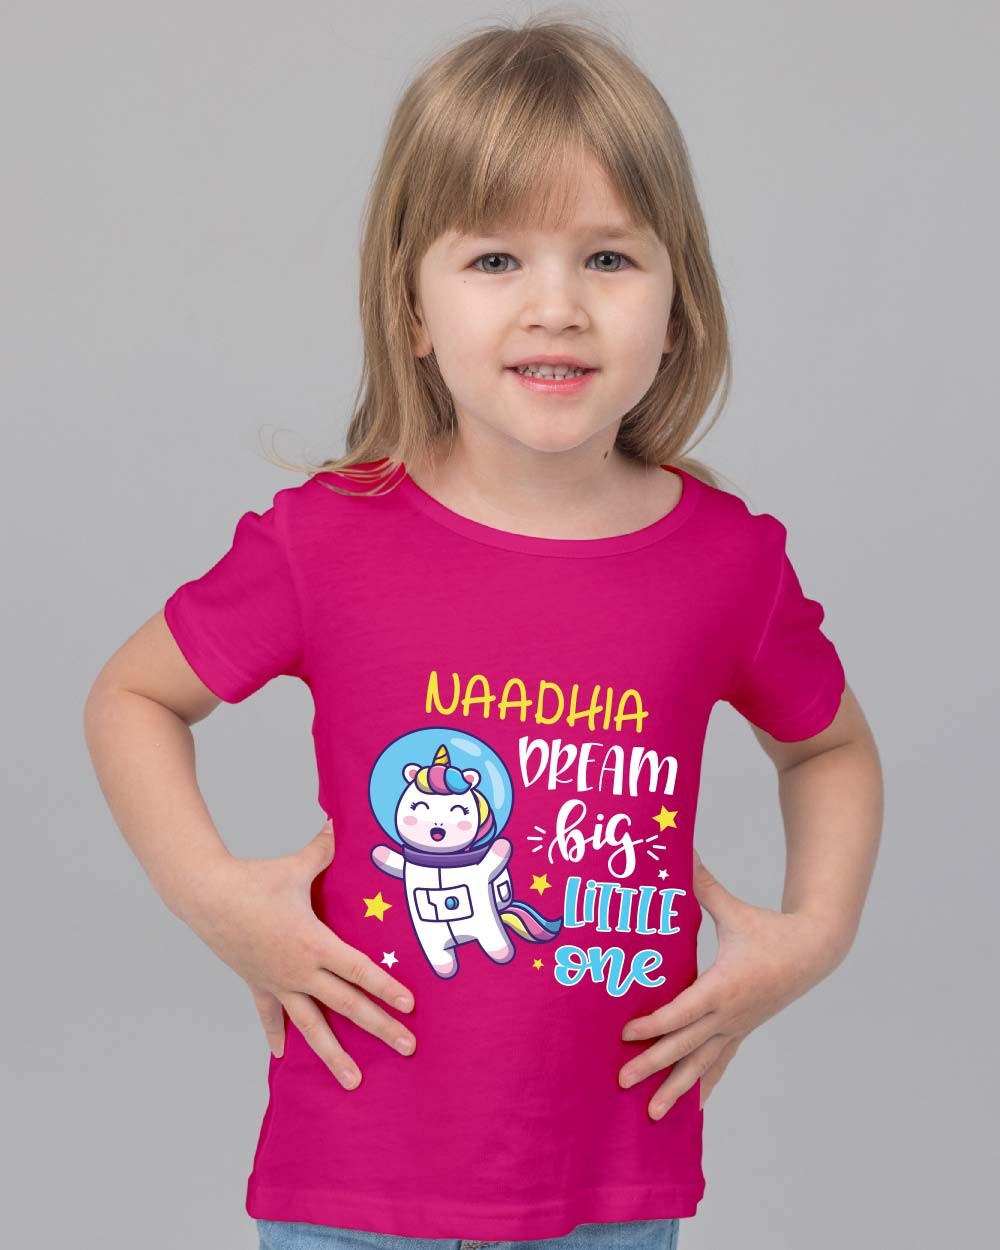 nsendm Big Kid childrenscostume School Shirts for Teen Girls